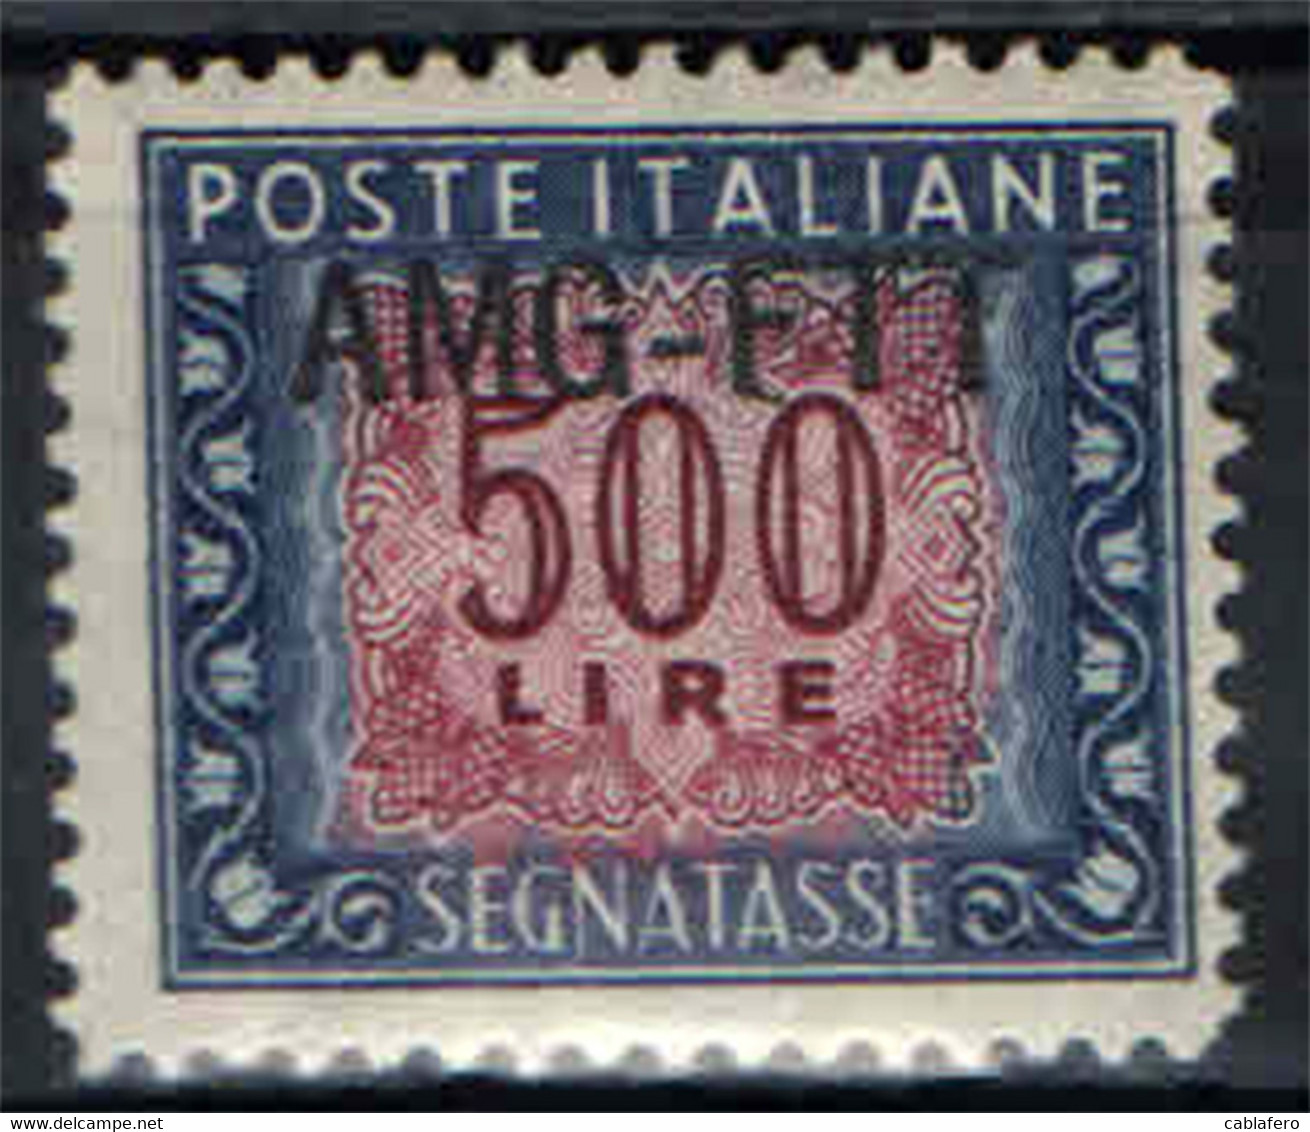 TRIESTE - AMGFTT - 1949 - SEGNATASSE - VALORE DA 500 LIRE - MNH - Revenue Stamps